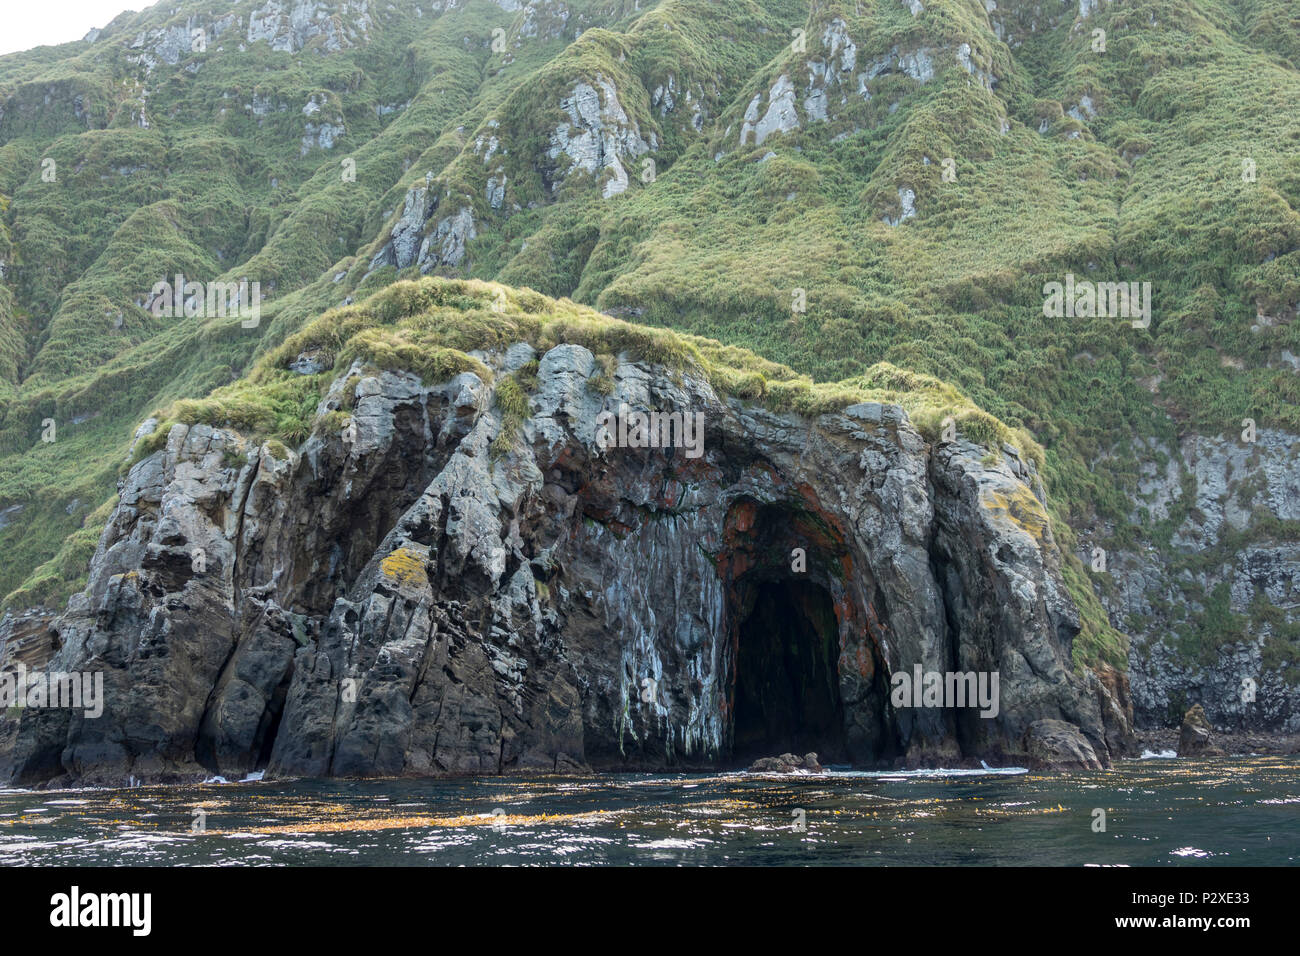 Natürliche Höhle auf Nachtigall Insel Tristan da Cunha Archipel, British Overseas Territories, South Atlantic Ocean Stockfoto